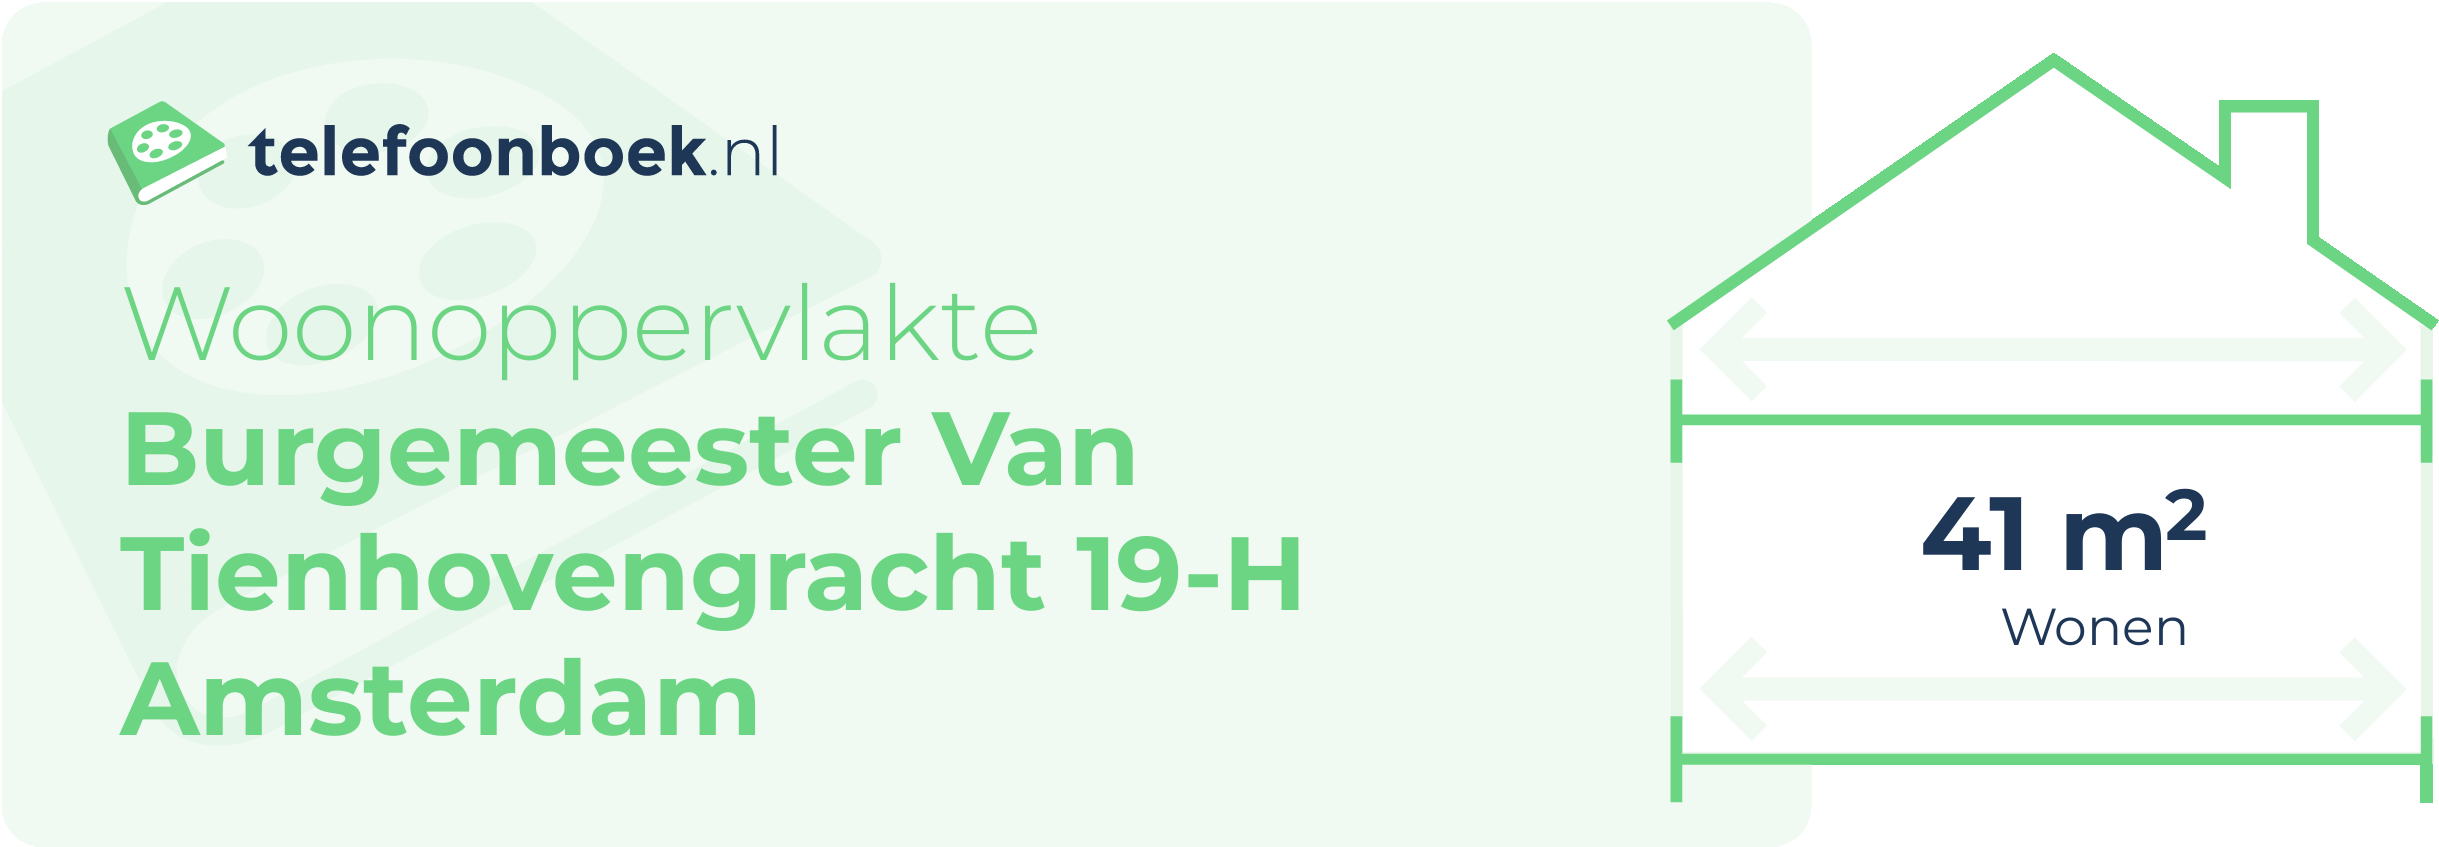 Woonoppervlakte Burgemeester Van Tienhovengracht 19-H Amsterdam